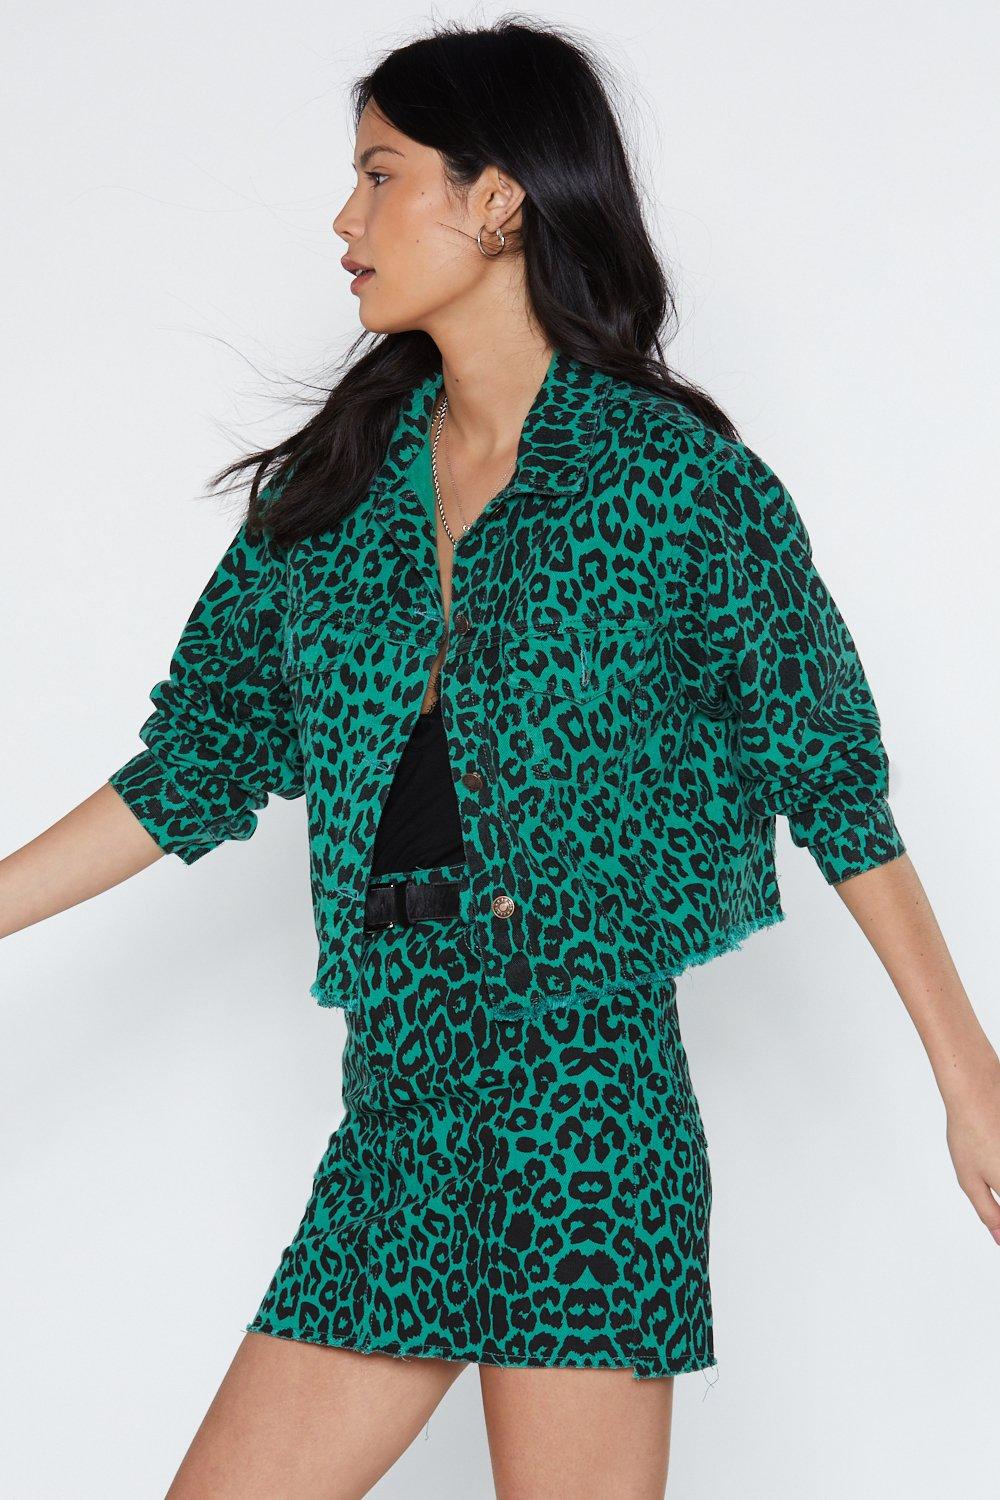 denim leopard jacket